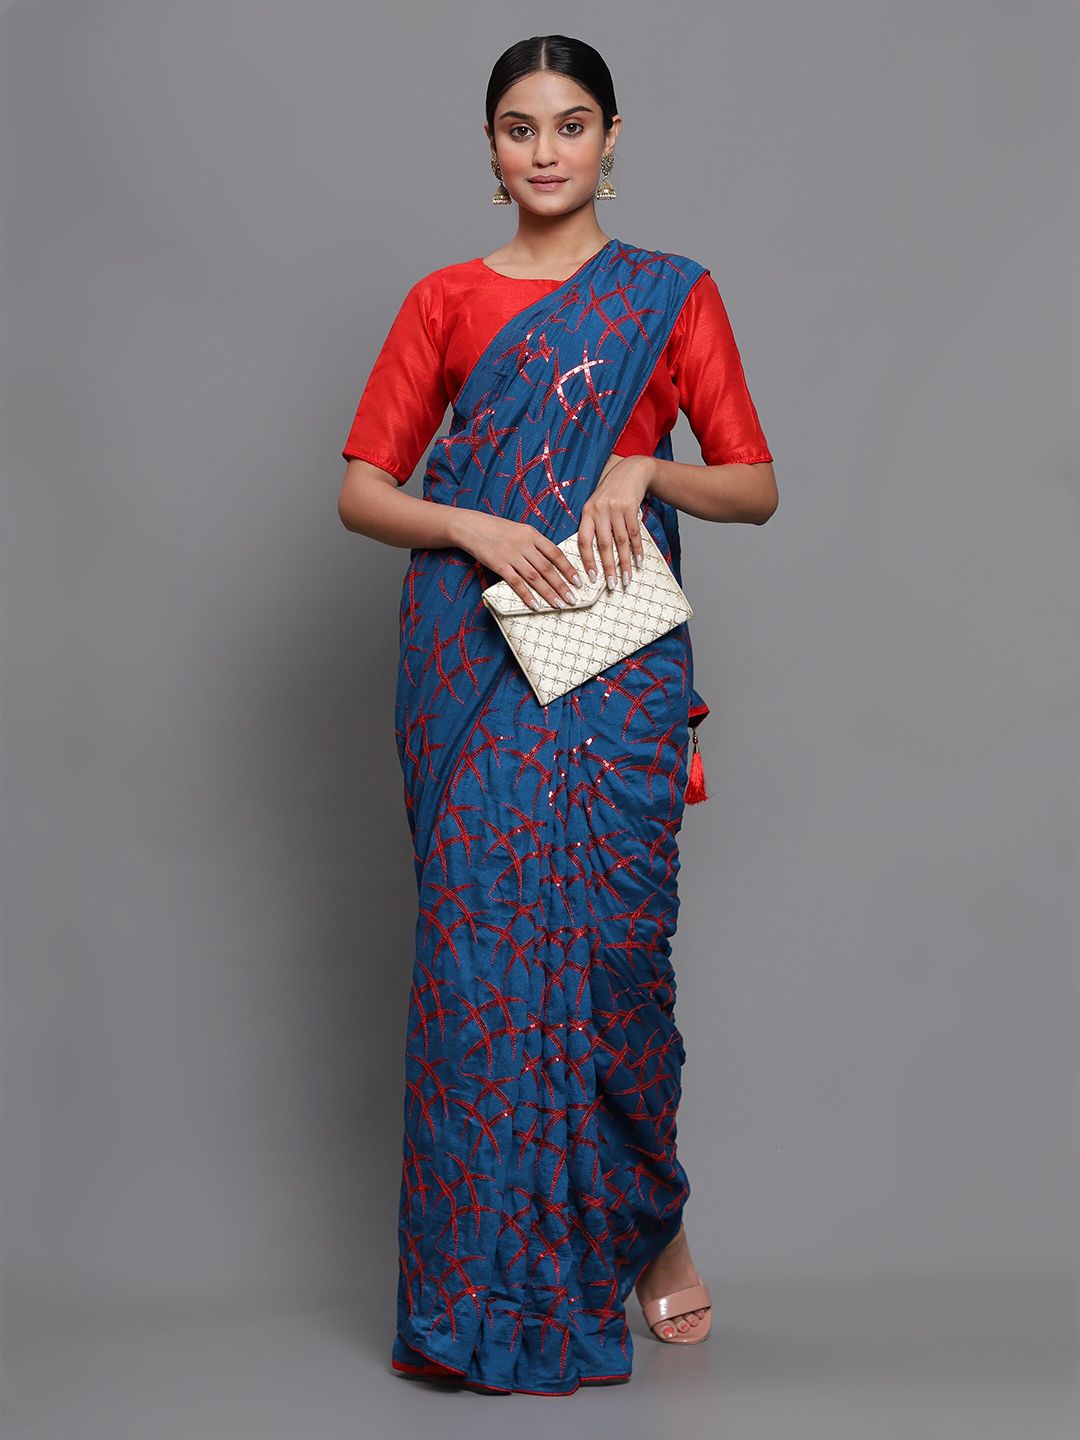 3BUDDY FASHION Turquoise Blue & Red Embellished Sequined Jute Silk Maheshwari Saree Price in India